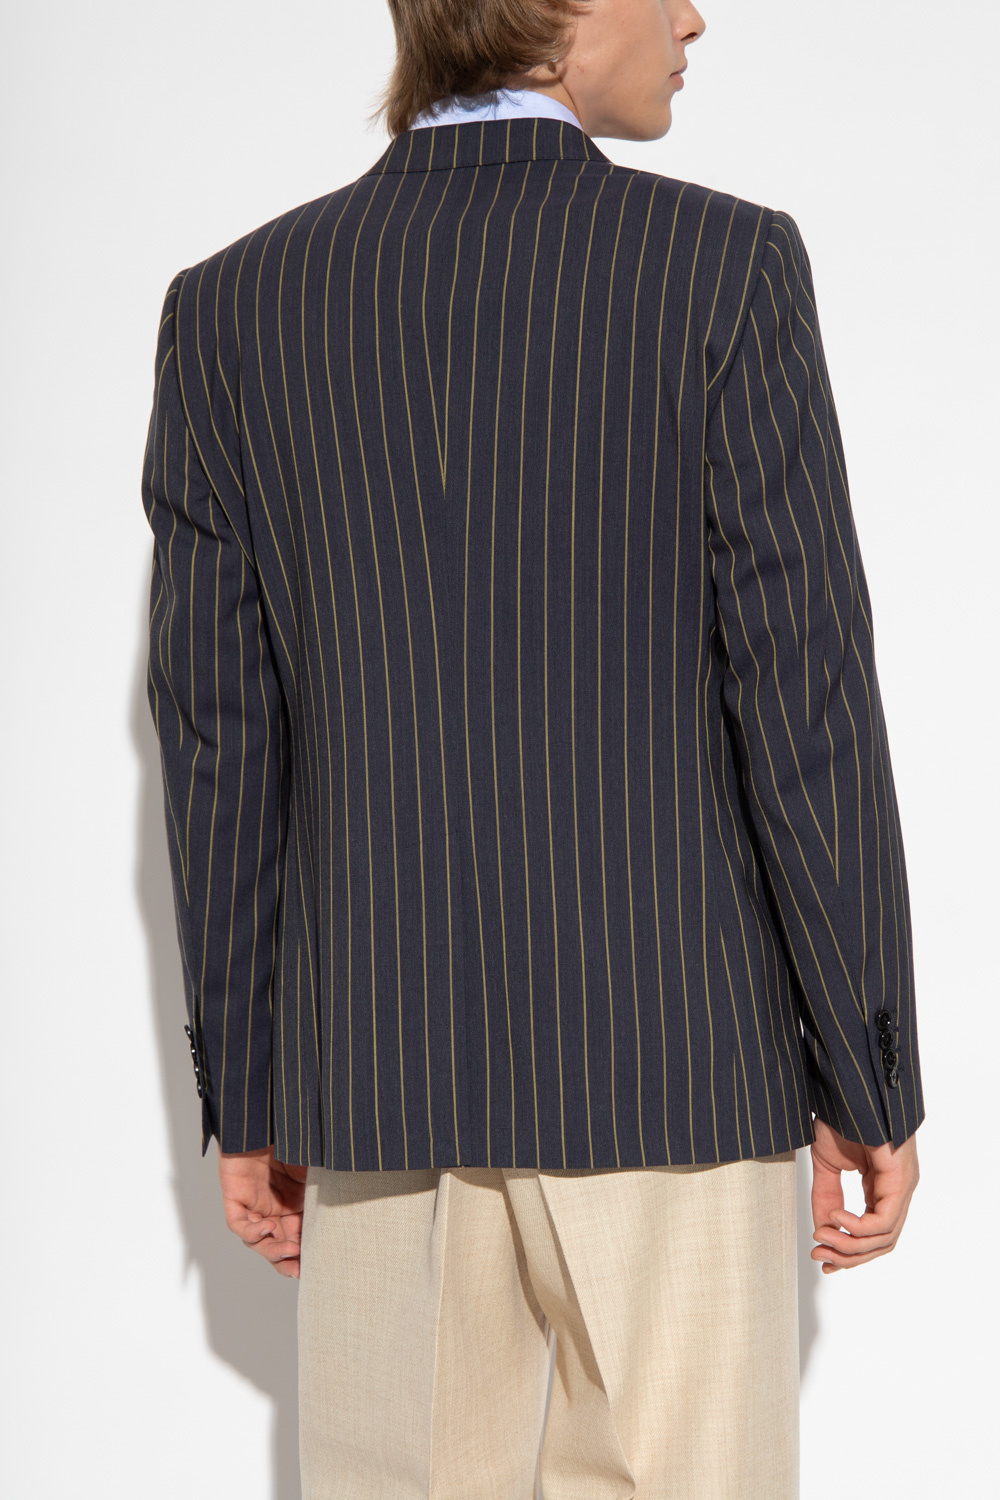 dolce mixed-print & Gabbana Striped blazer